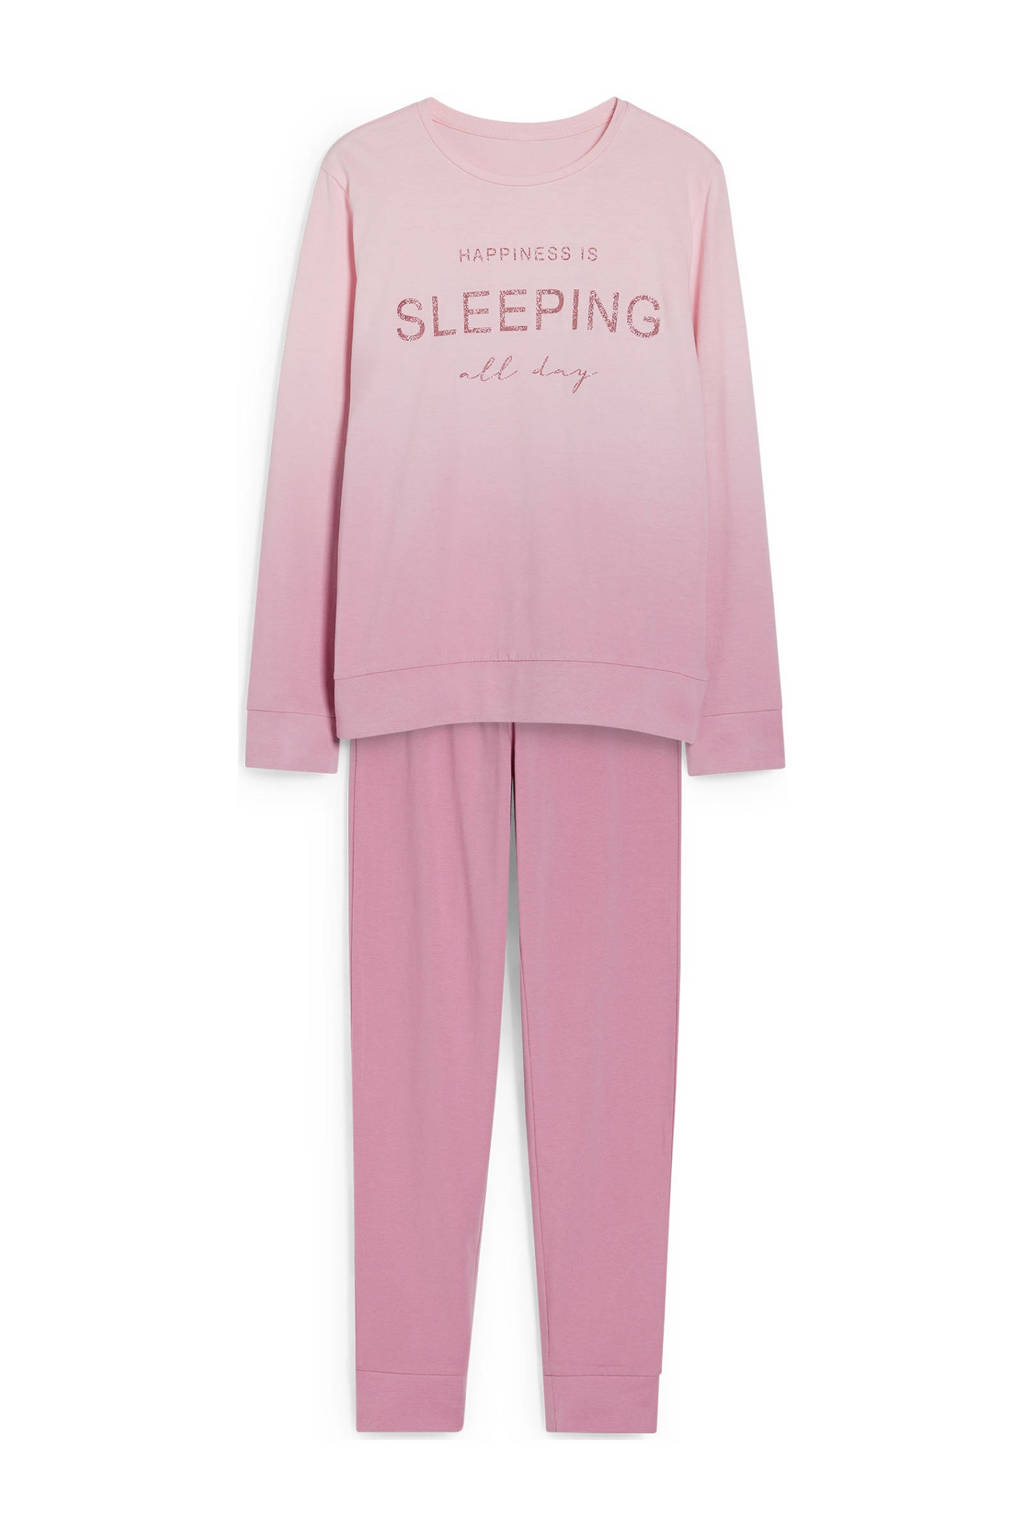 C&A pyjama met tekst roze